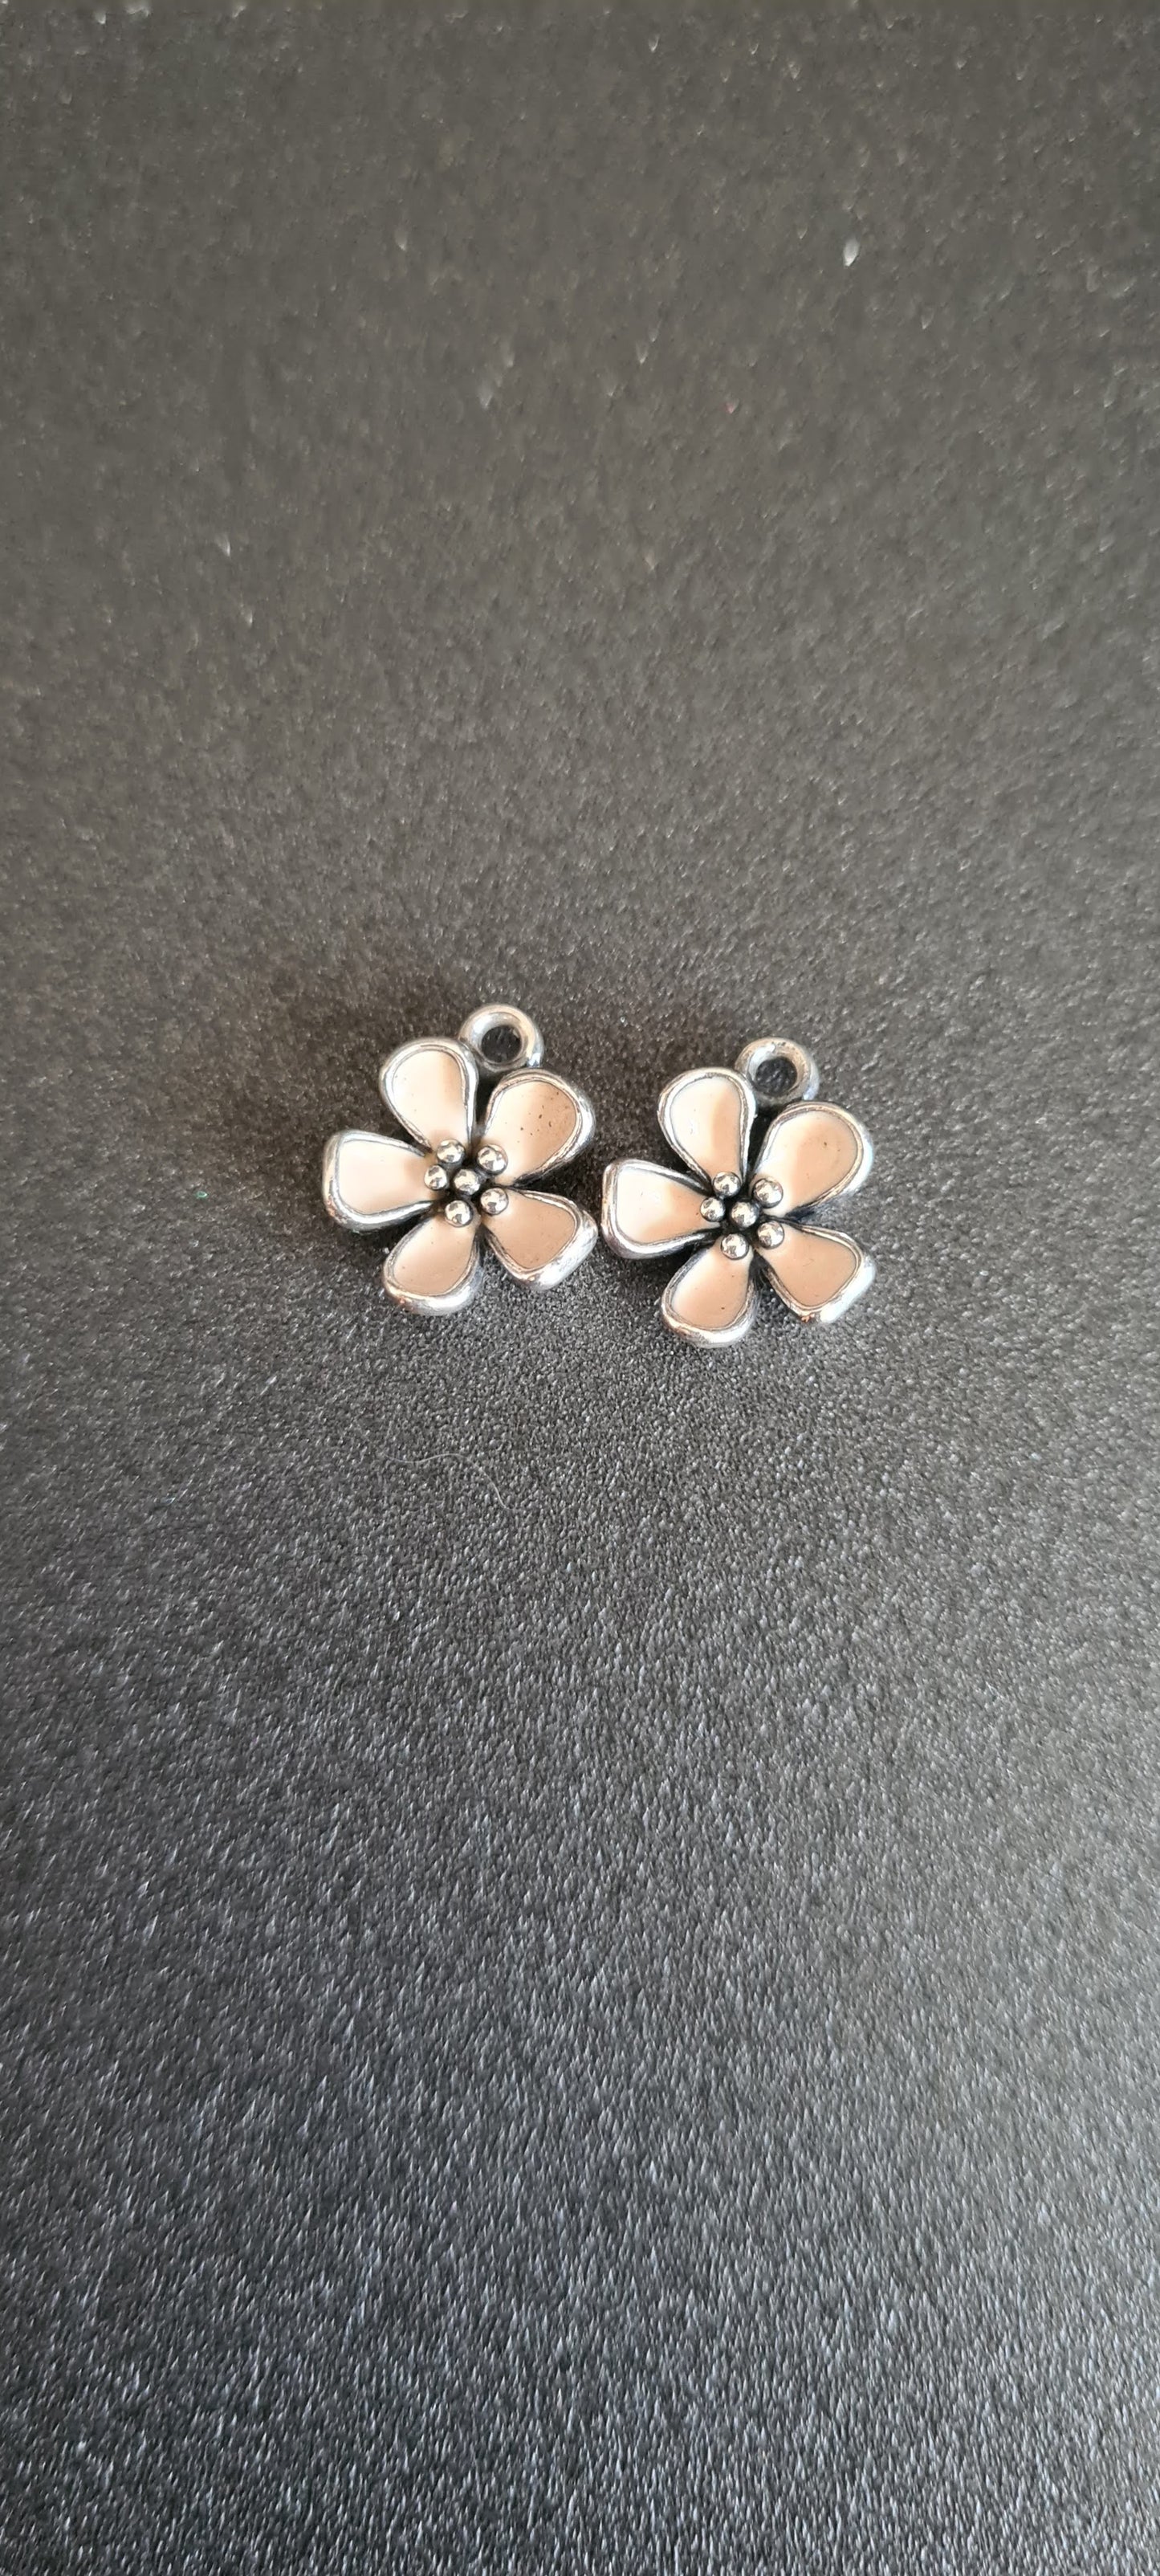 Genuine Pandora Cherry Blossom Compose Charms for Earrings